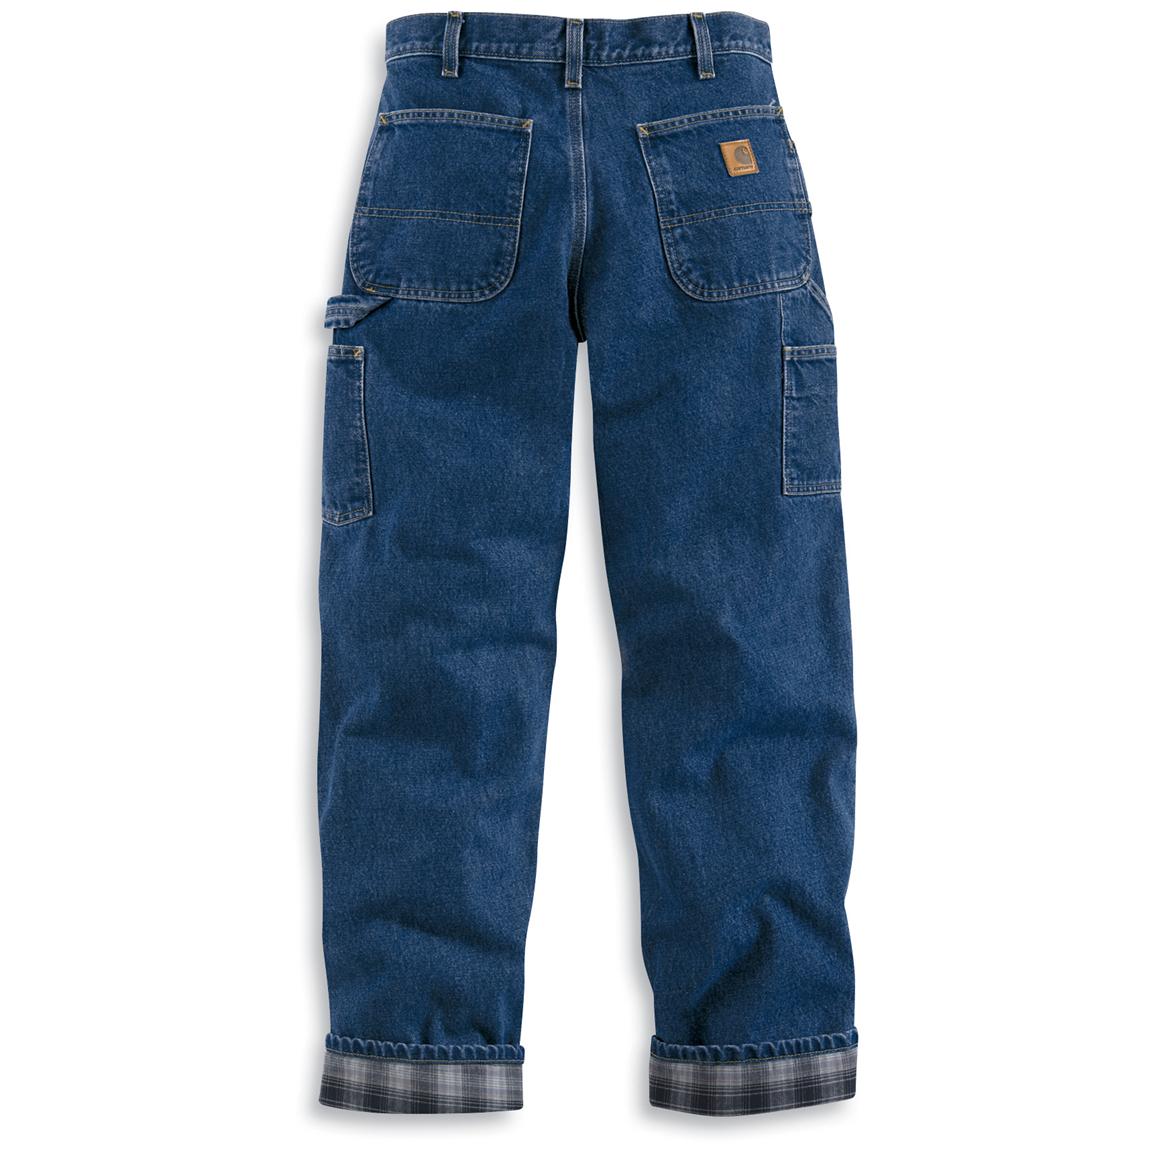 flannel lined carpenter jeans